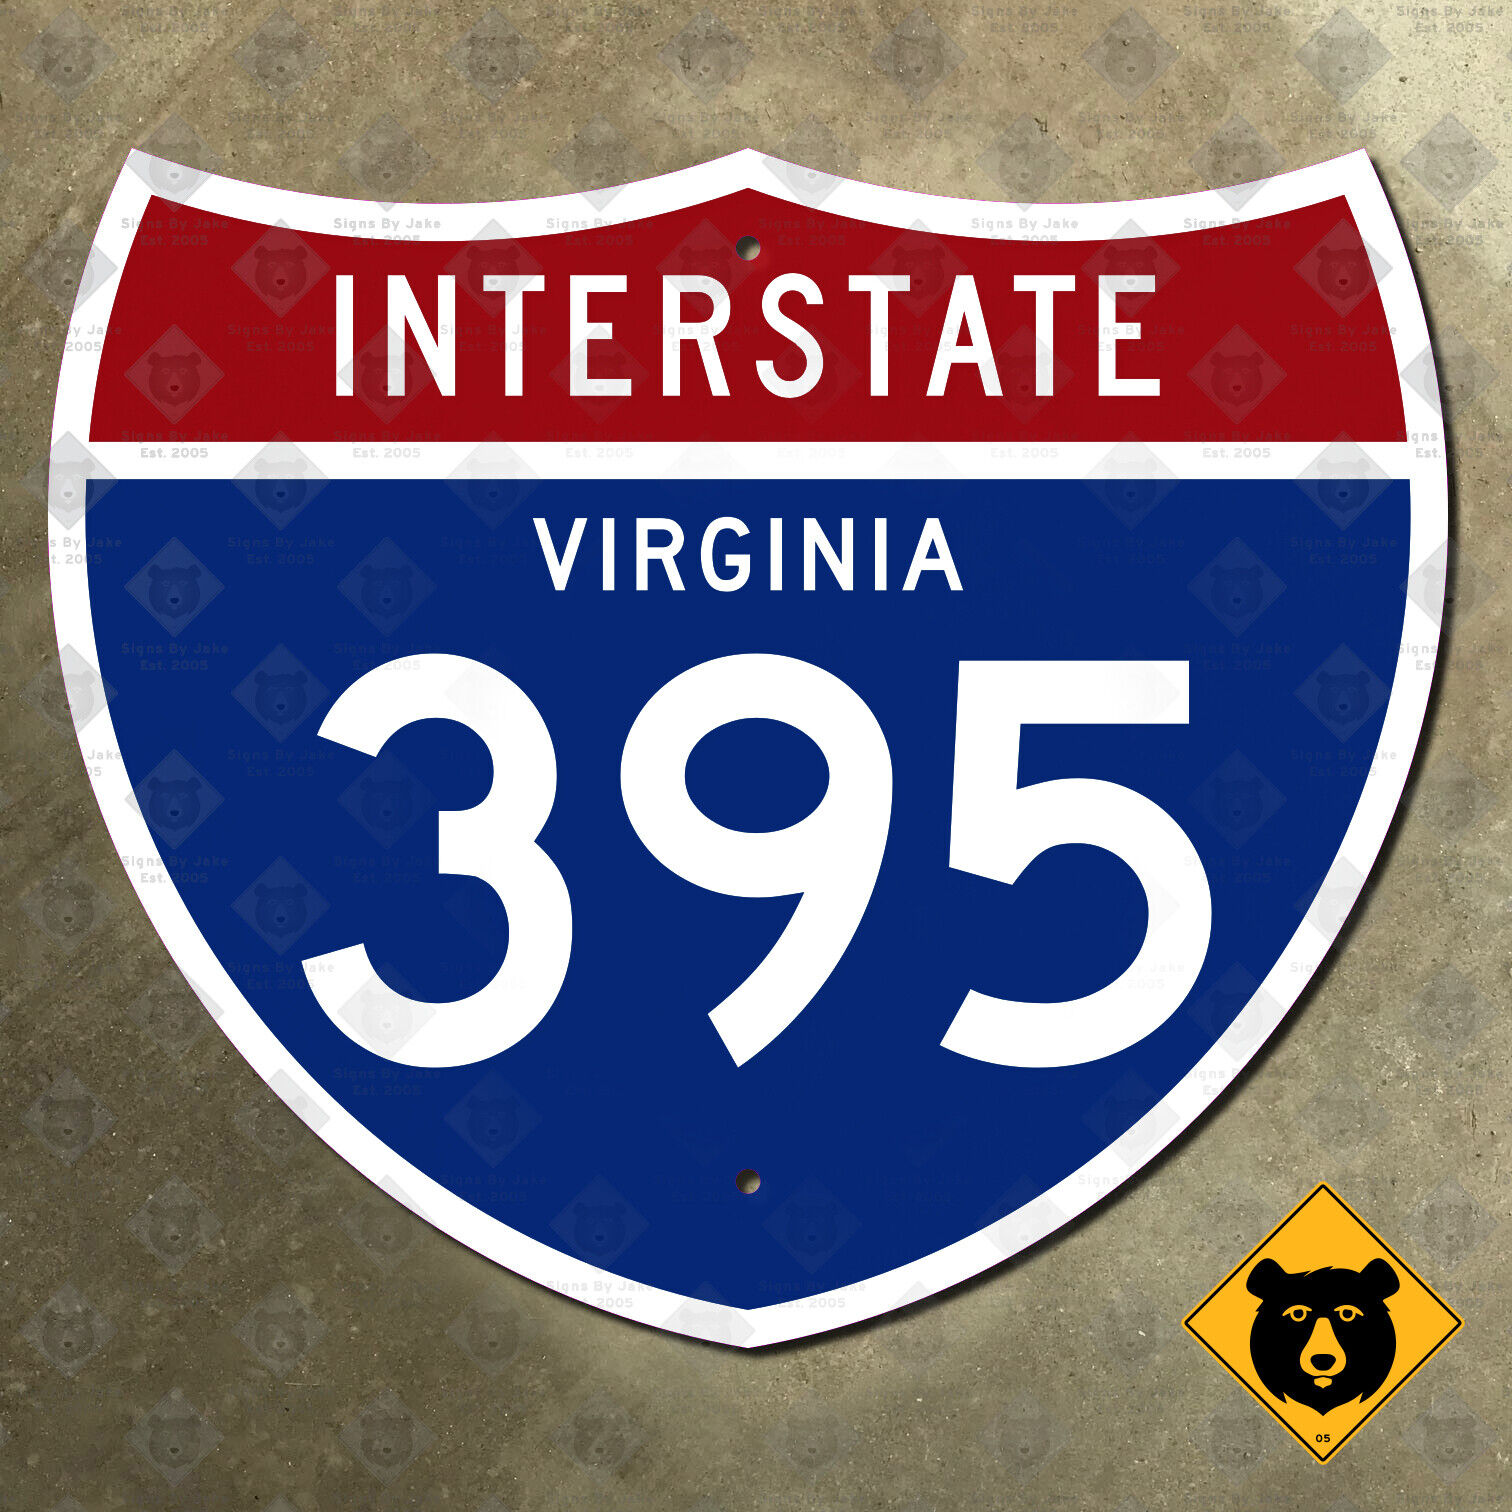 Virginia Interstate 395 highway route sign 1961 Alexandria Arlington 21x18